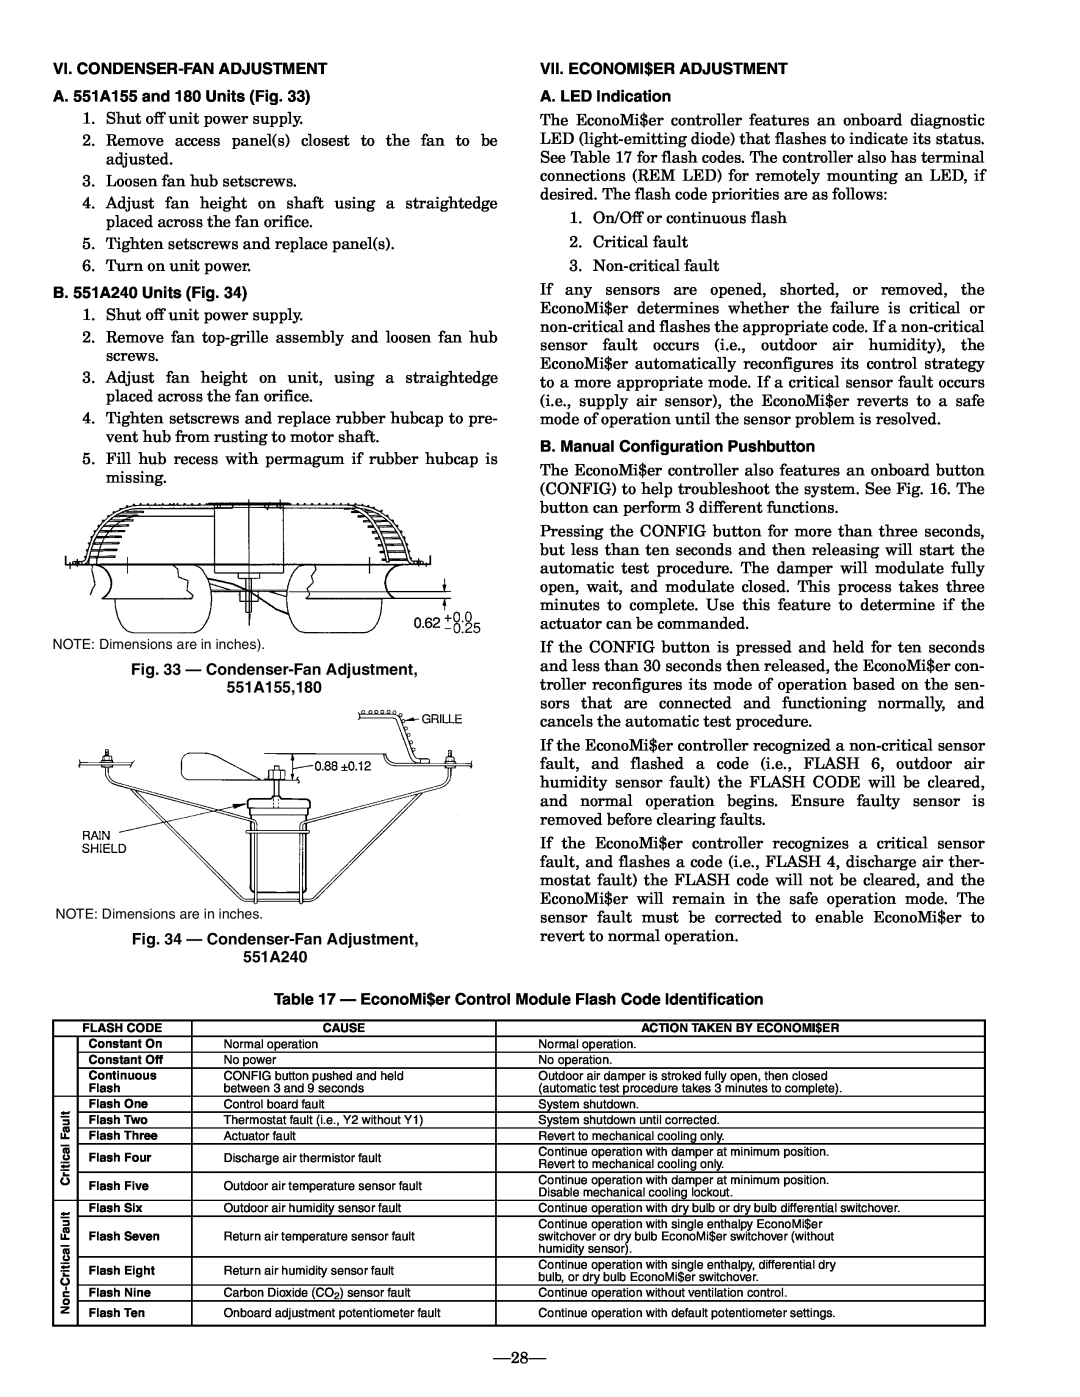 Bryant operation manual 28, Vi. Condenser-Fanadjustment, A. 551A155 and 180 Units Fig, B.551A240 Units Fig 